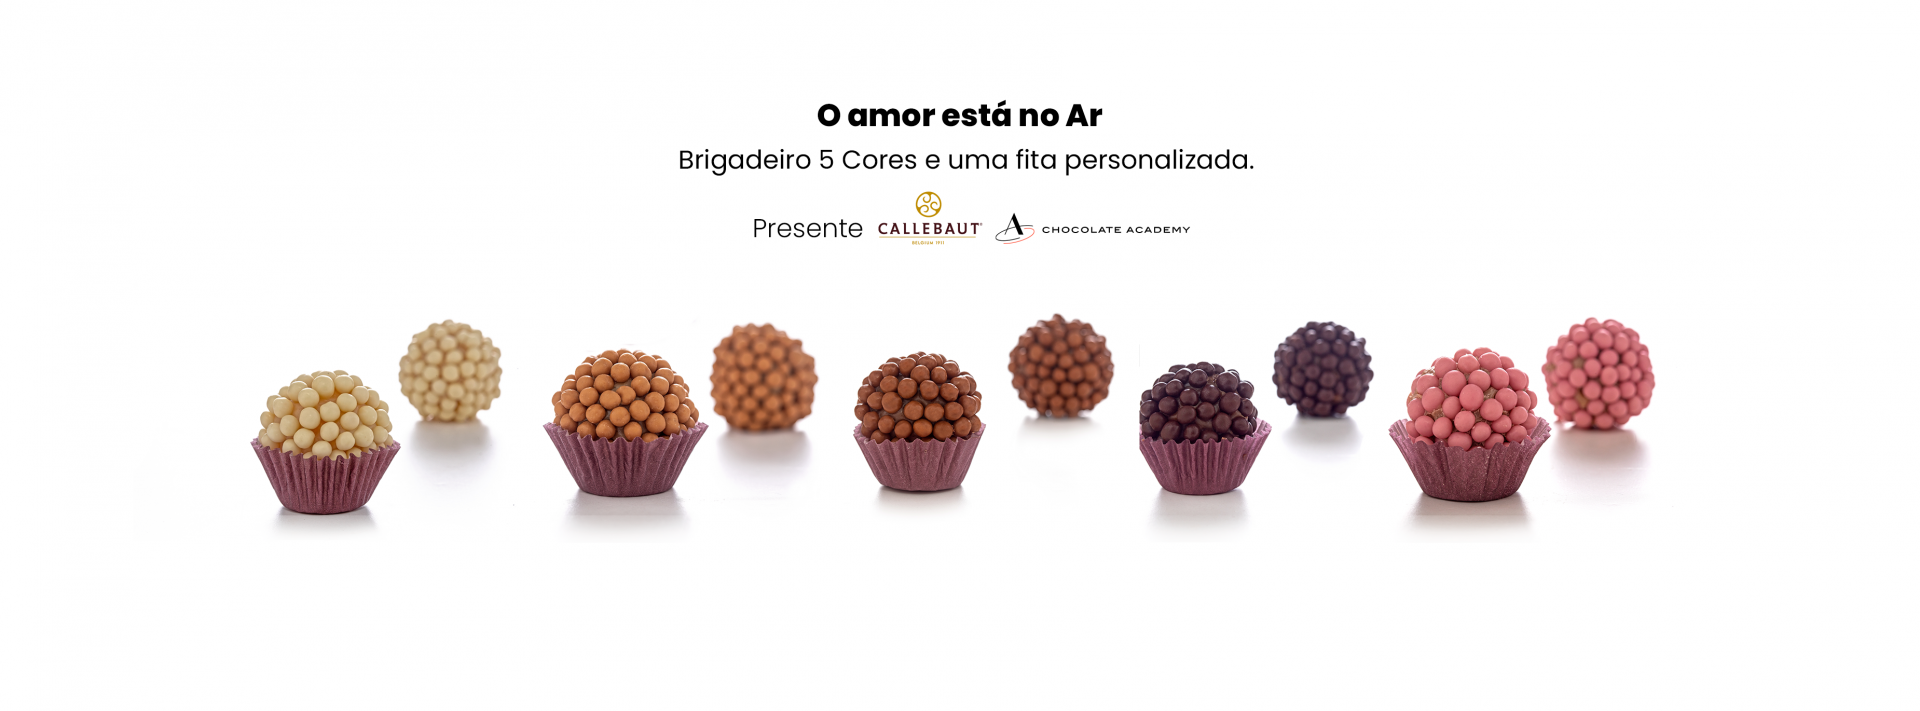 brigadeiro-5-cores-callebaut-chocolate-academy